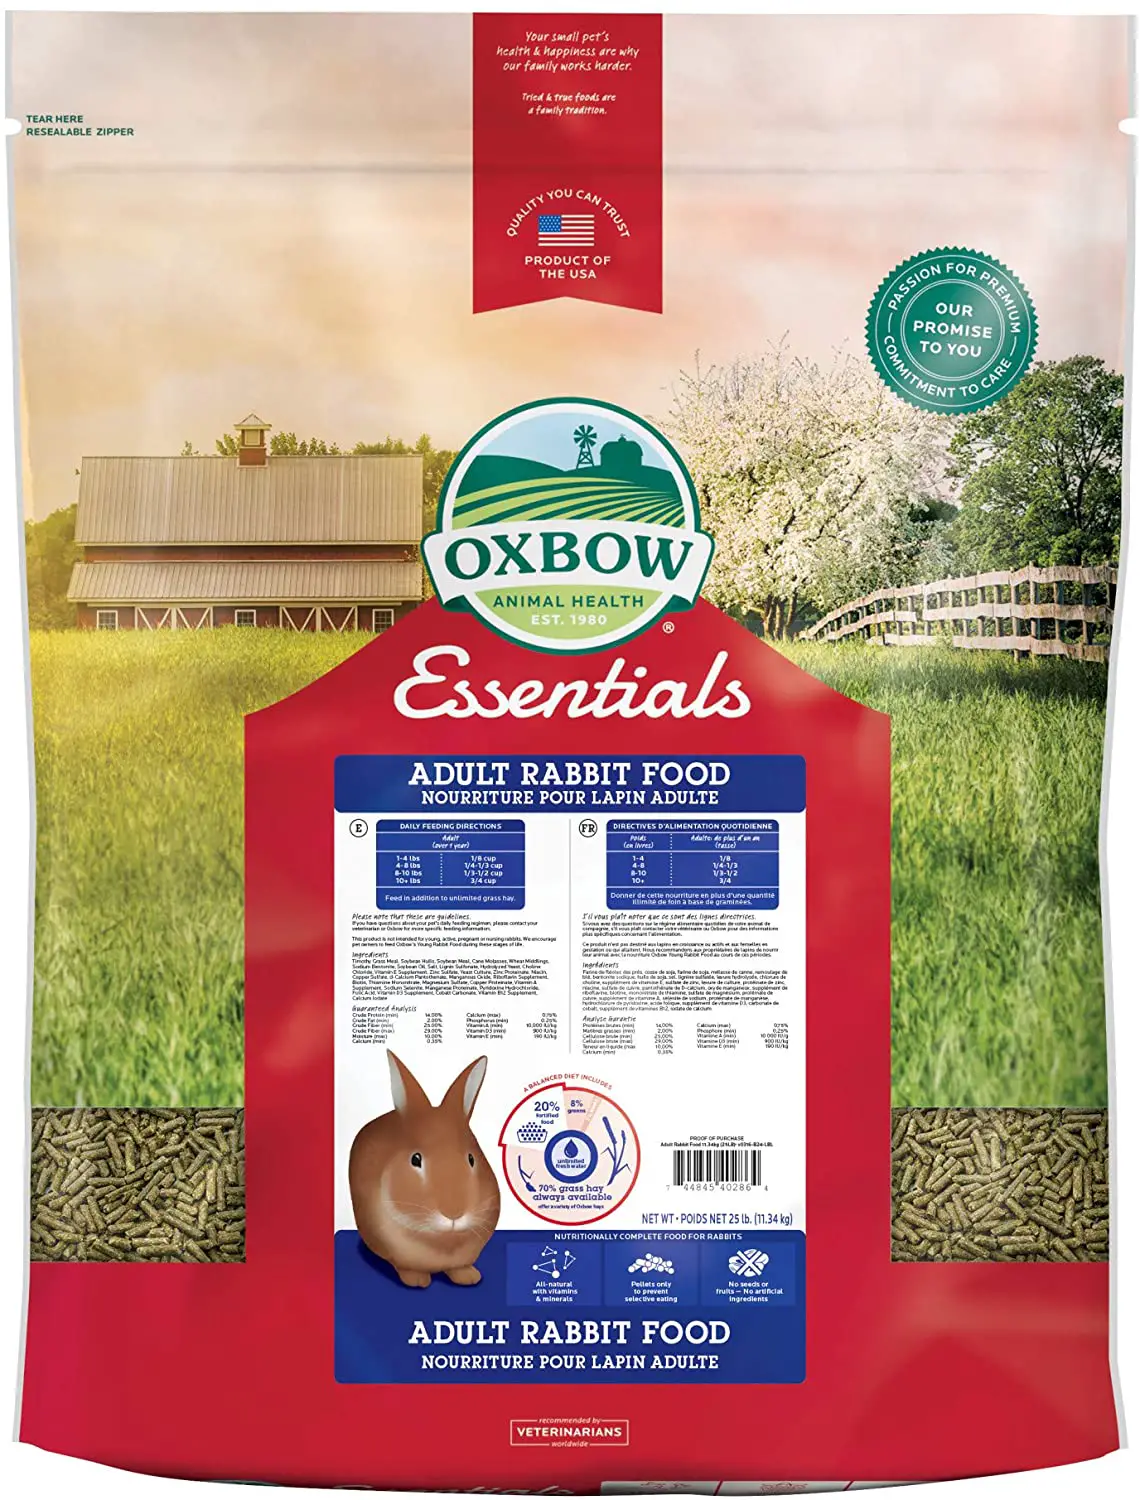 Oxbow Essentials Rabbit Food - All Natural Rabbit Pellets